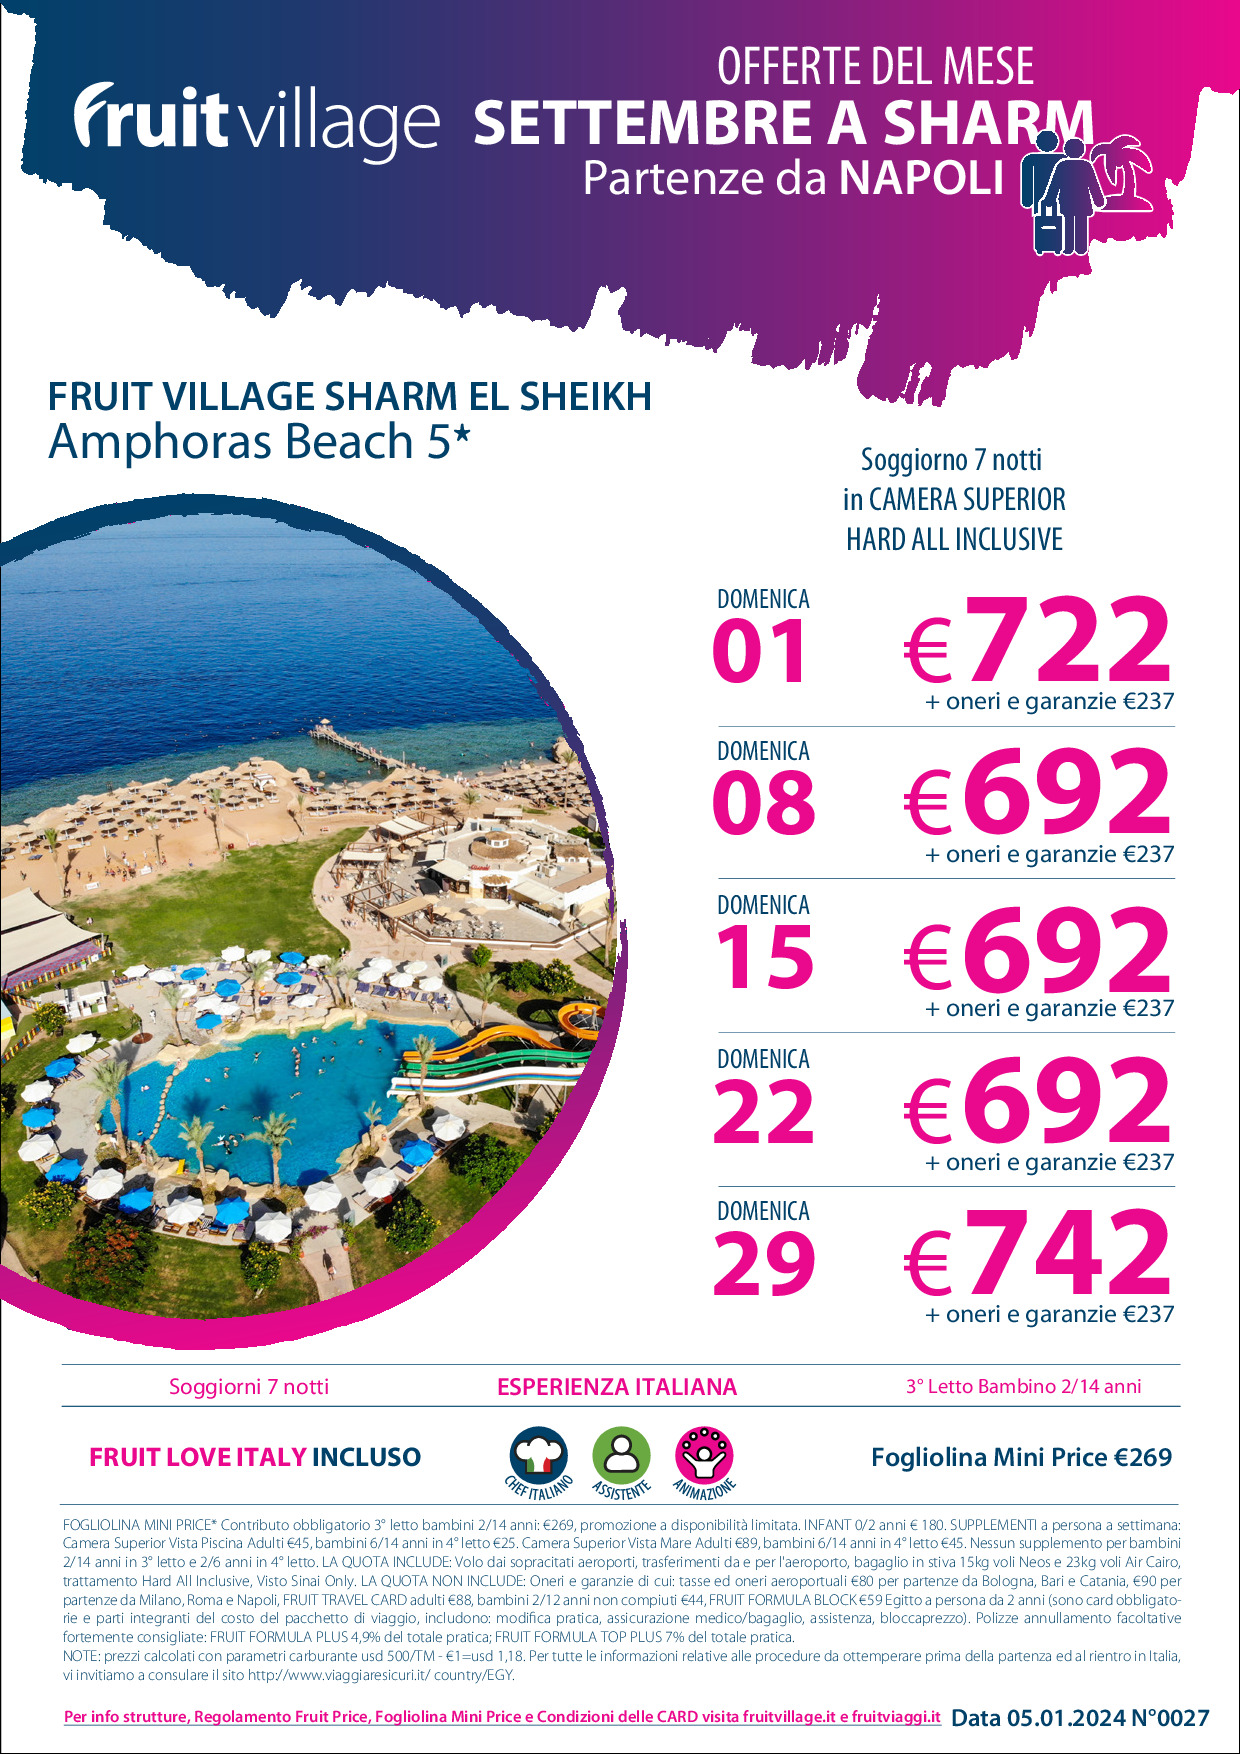 FRUIT VILLAGE Sharm Amphoras Beach 5* da Napoli Settembre